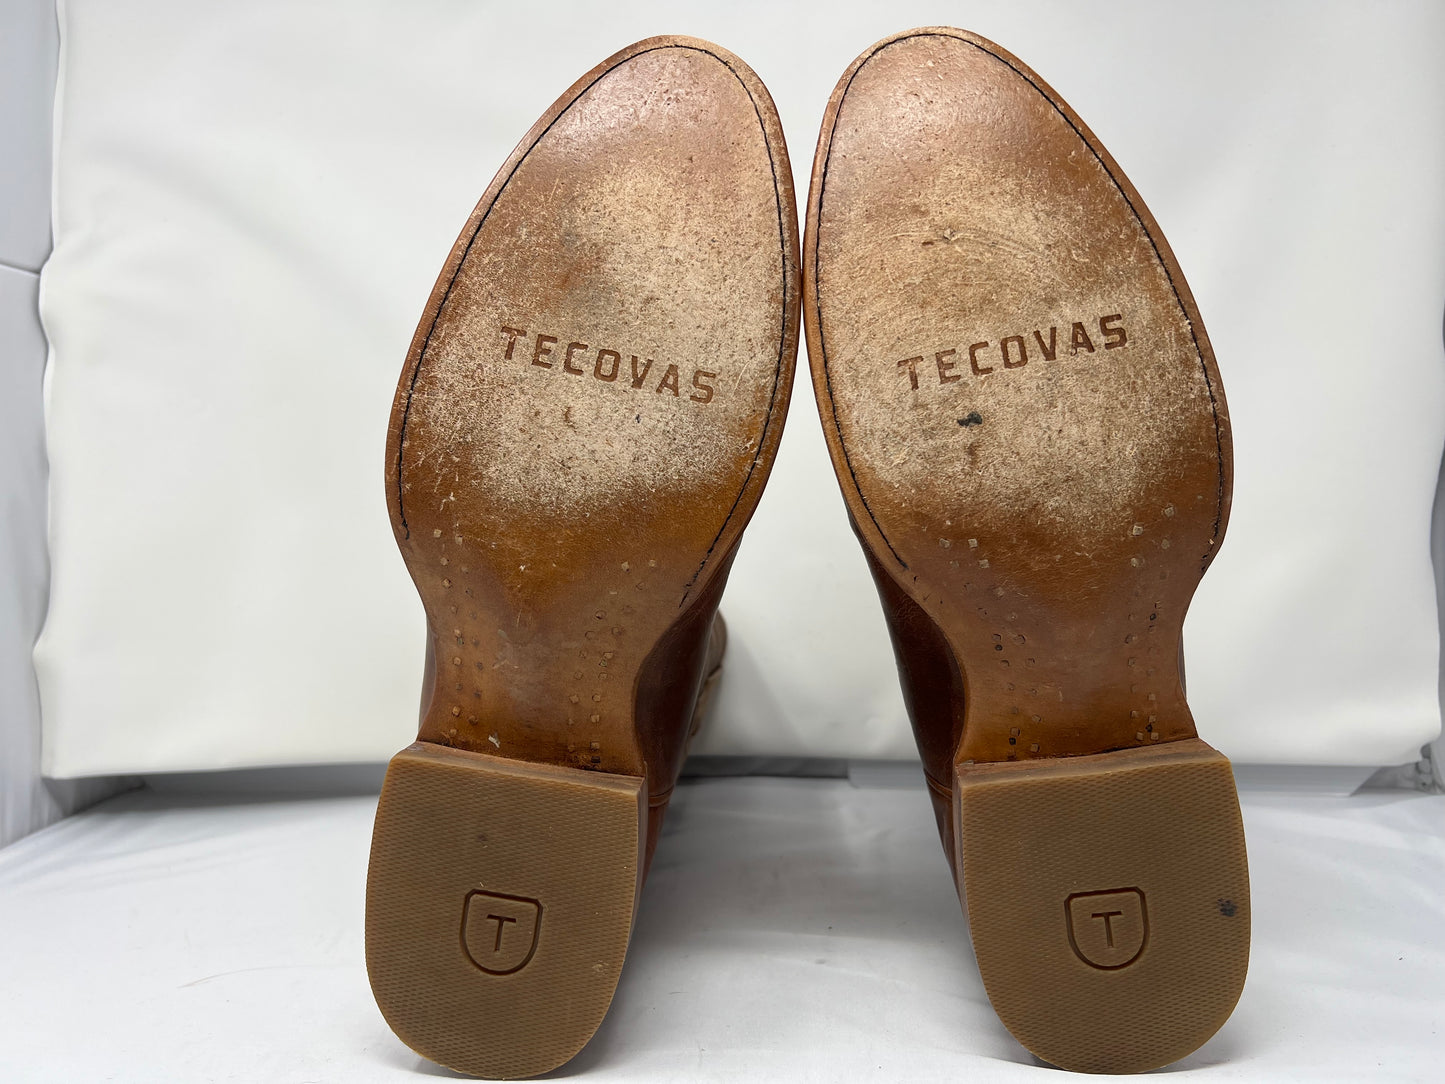 TECOVAS “The Earl” Scotch Goat Boot 11.5D